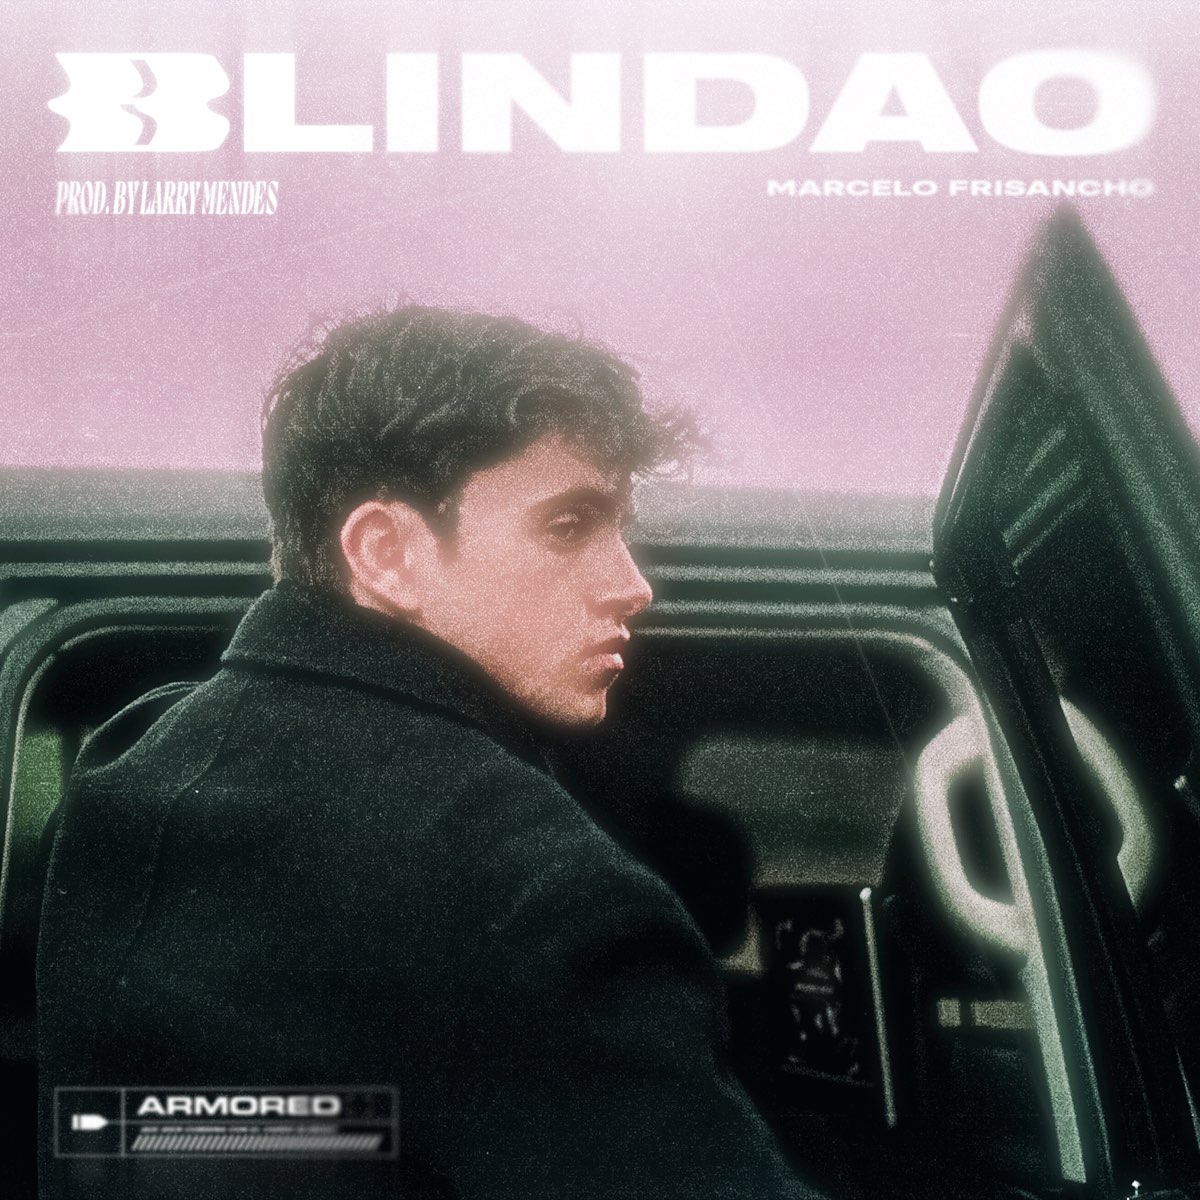 Blindao - Single - Album by Marcelo Frisancho & Larry Mendes - Apple Music